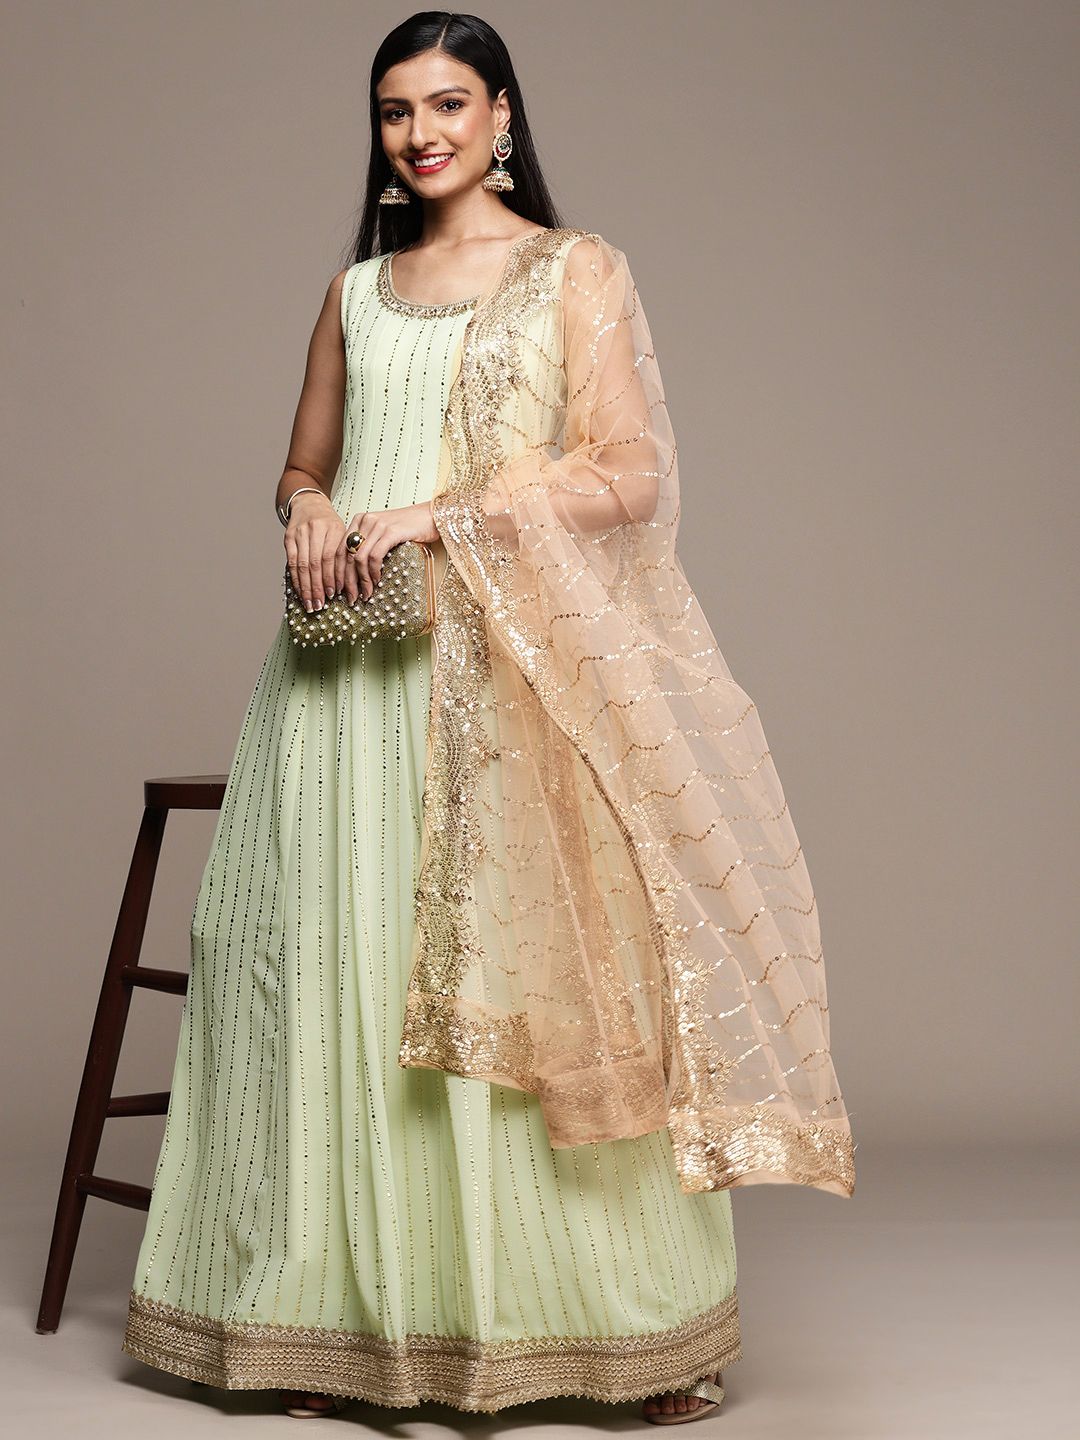 SAARYA Woman Ethnic Motifs Georgette Ethnic Maxi Dress With Dupatta Price in India